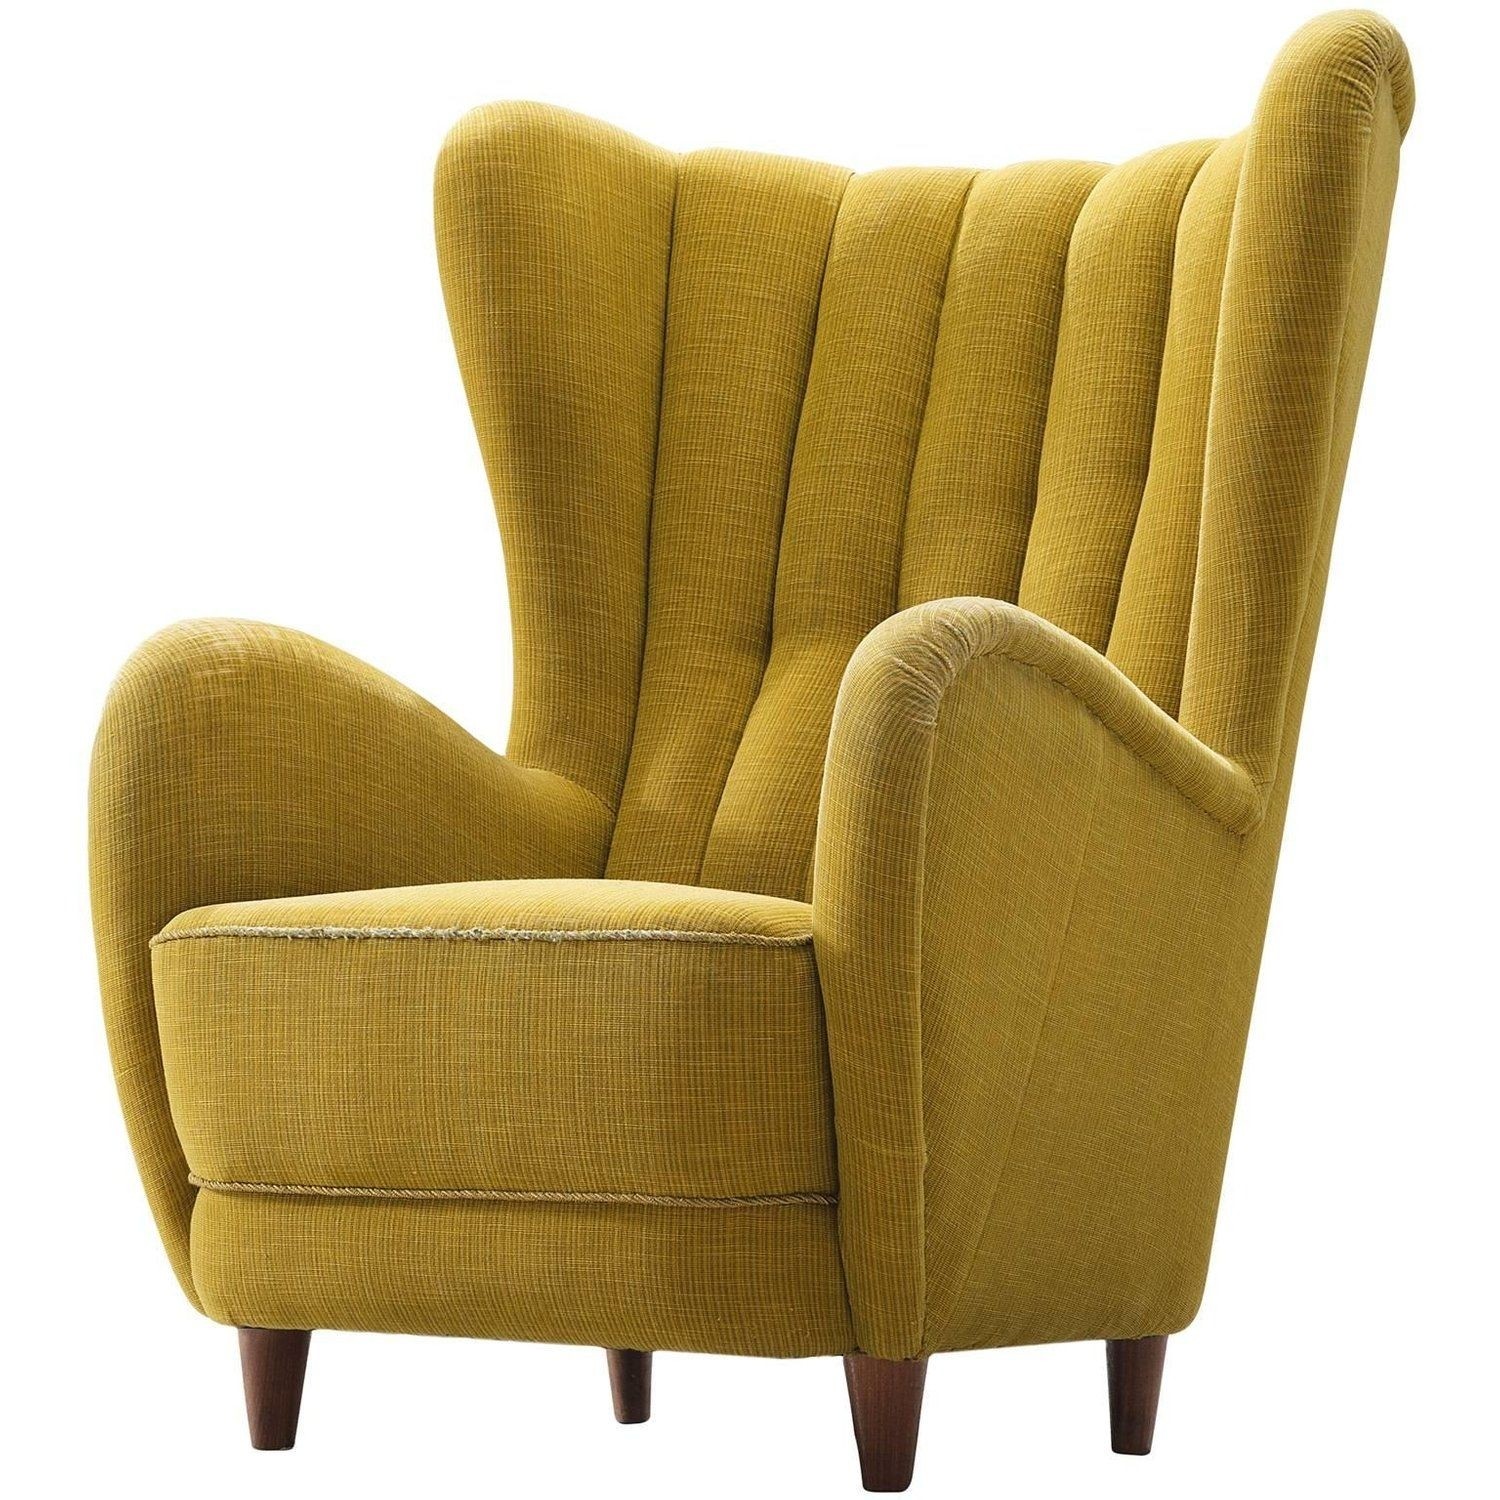 Danish wingback chair in original yellow upholstery